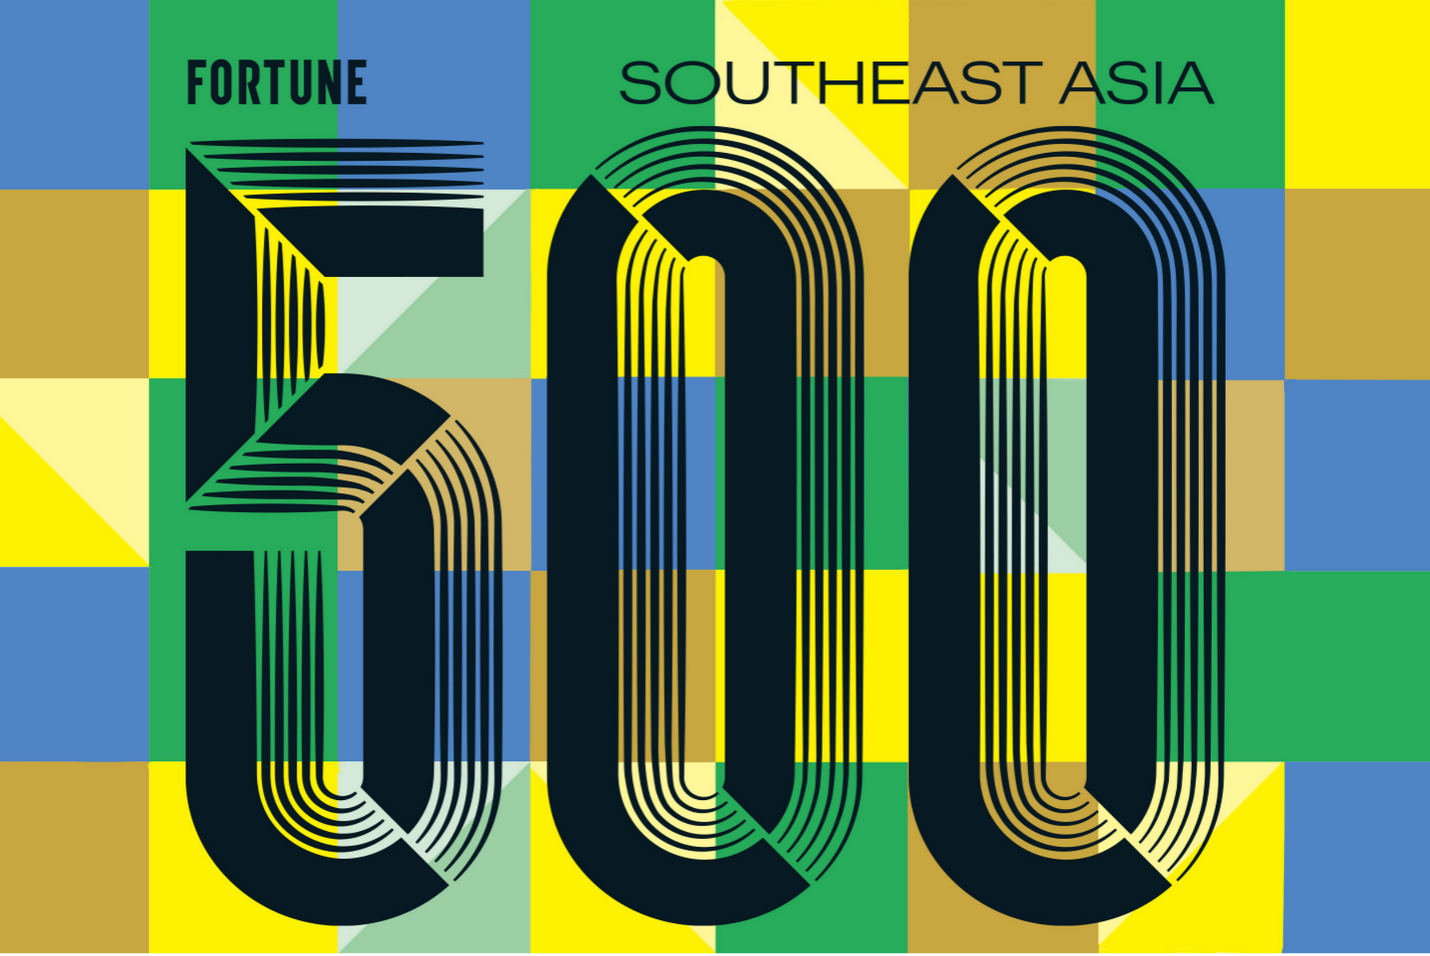 pv gas thuoc top100 doanh nghiep hang dau trong bang xep hang cua fortune  the southeast asia 500 hinh 1